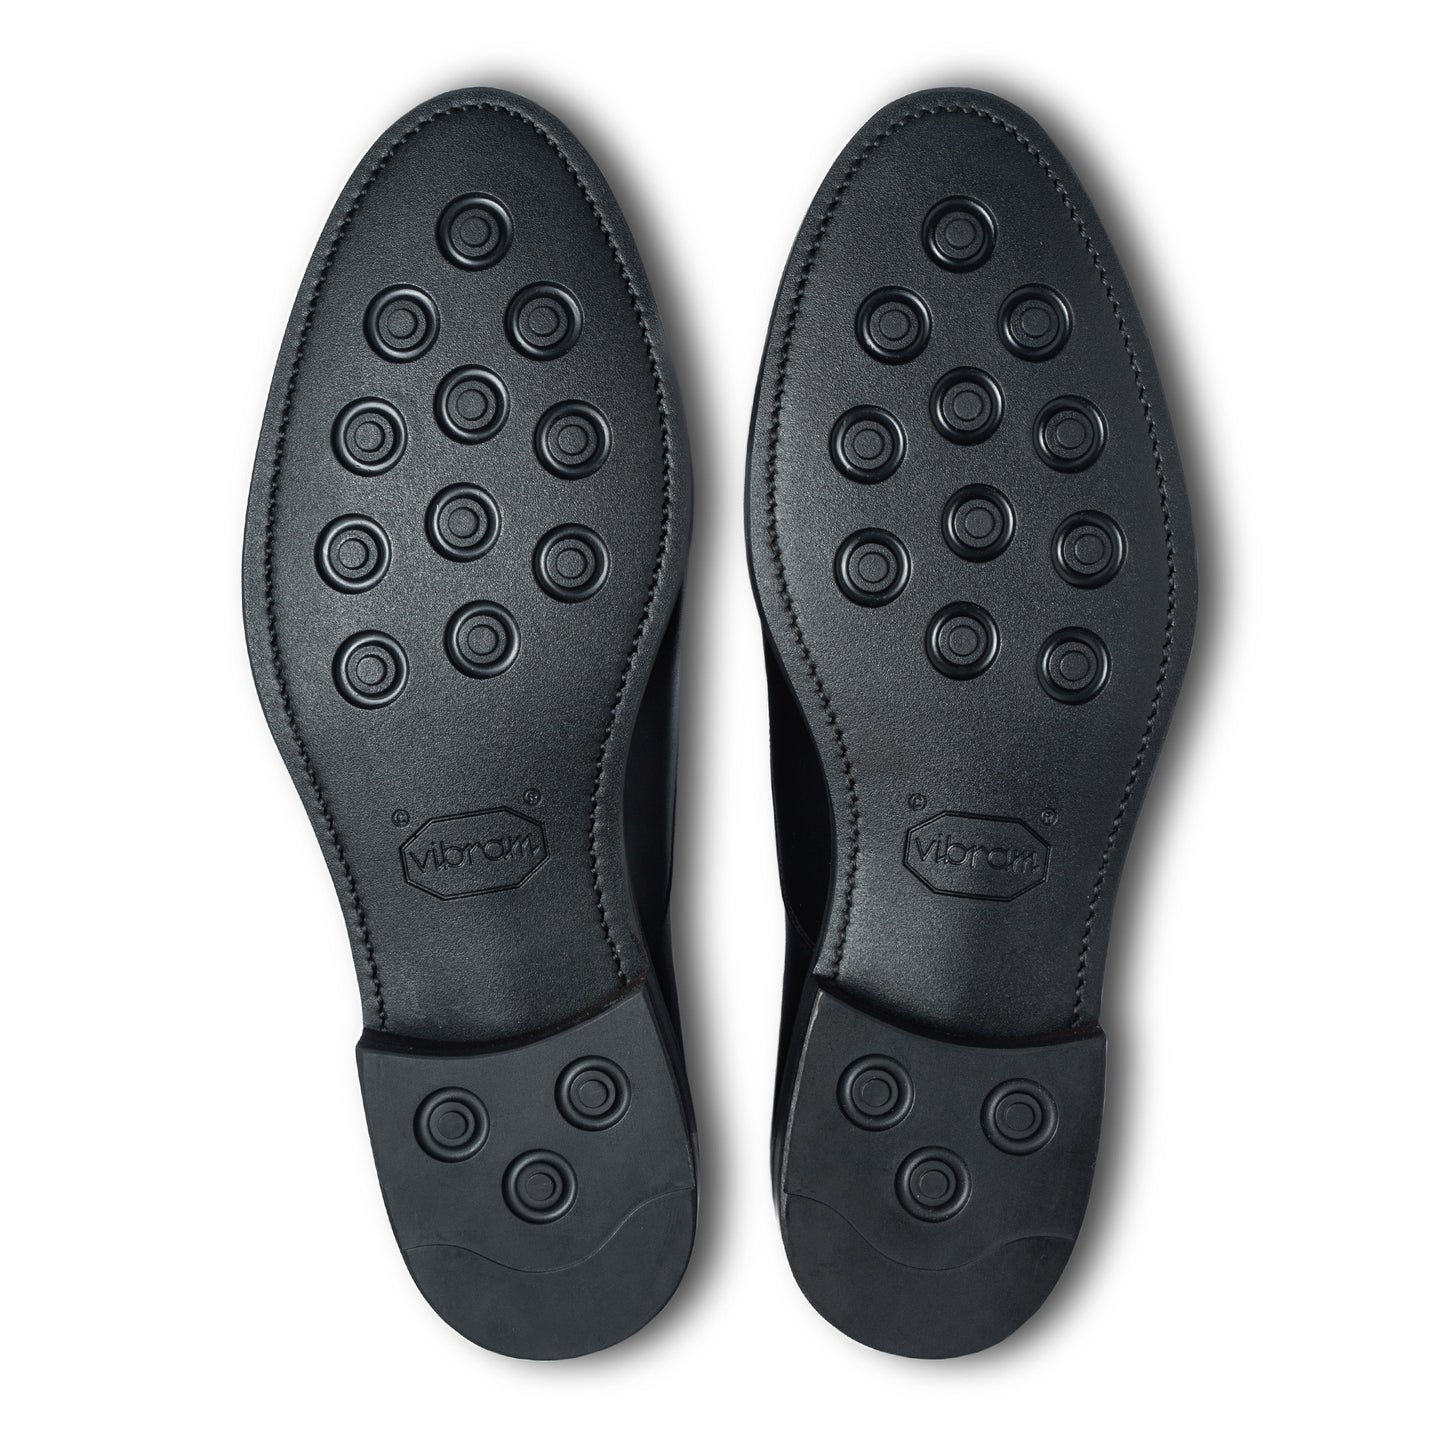 TLB Mallorca leather shoes 690 / MADISON / BOXCALF BLACK